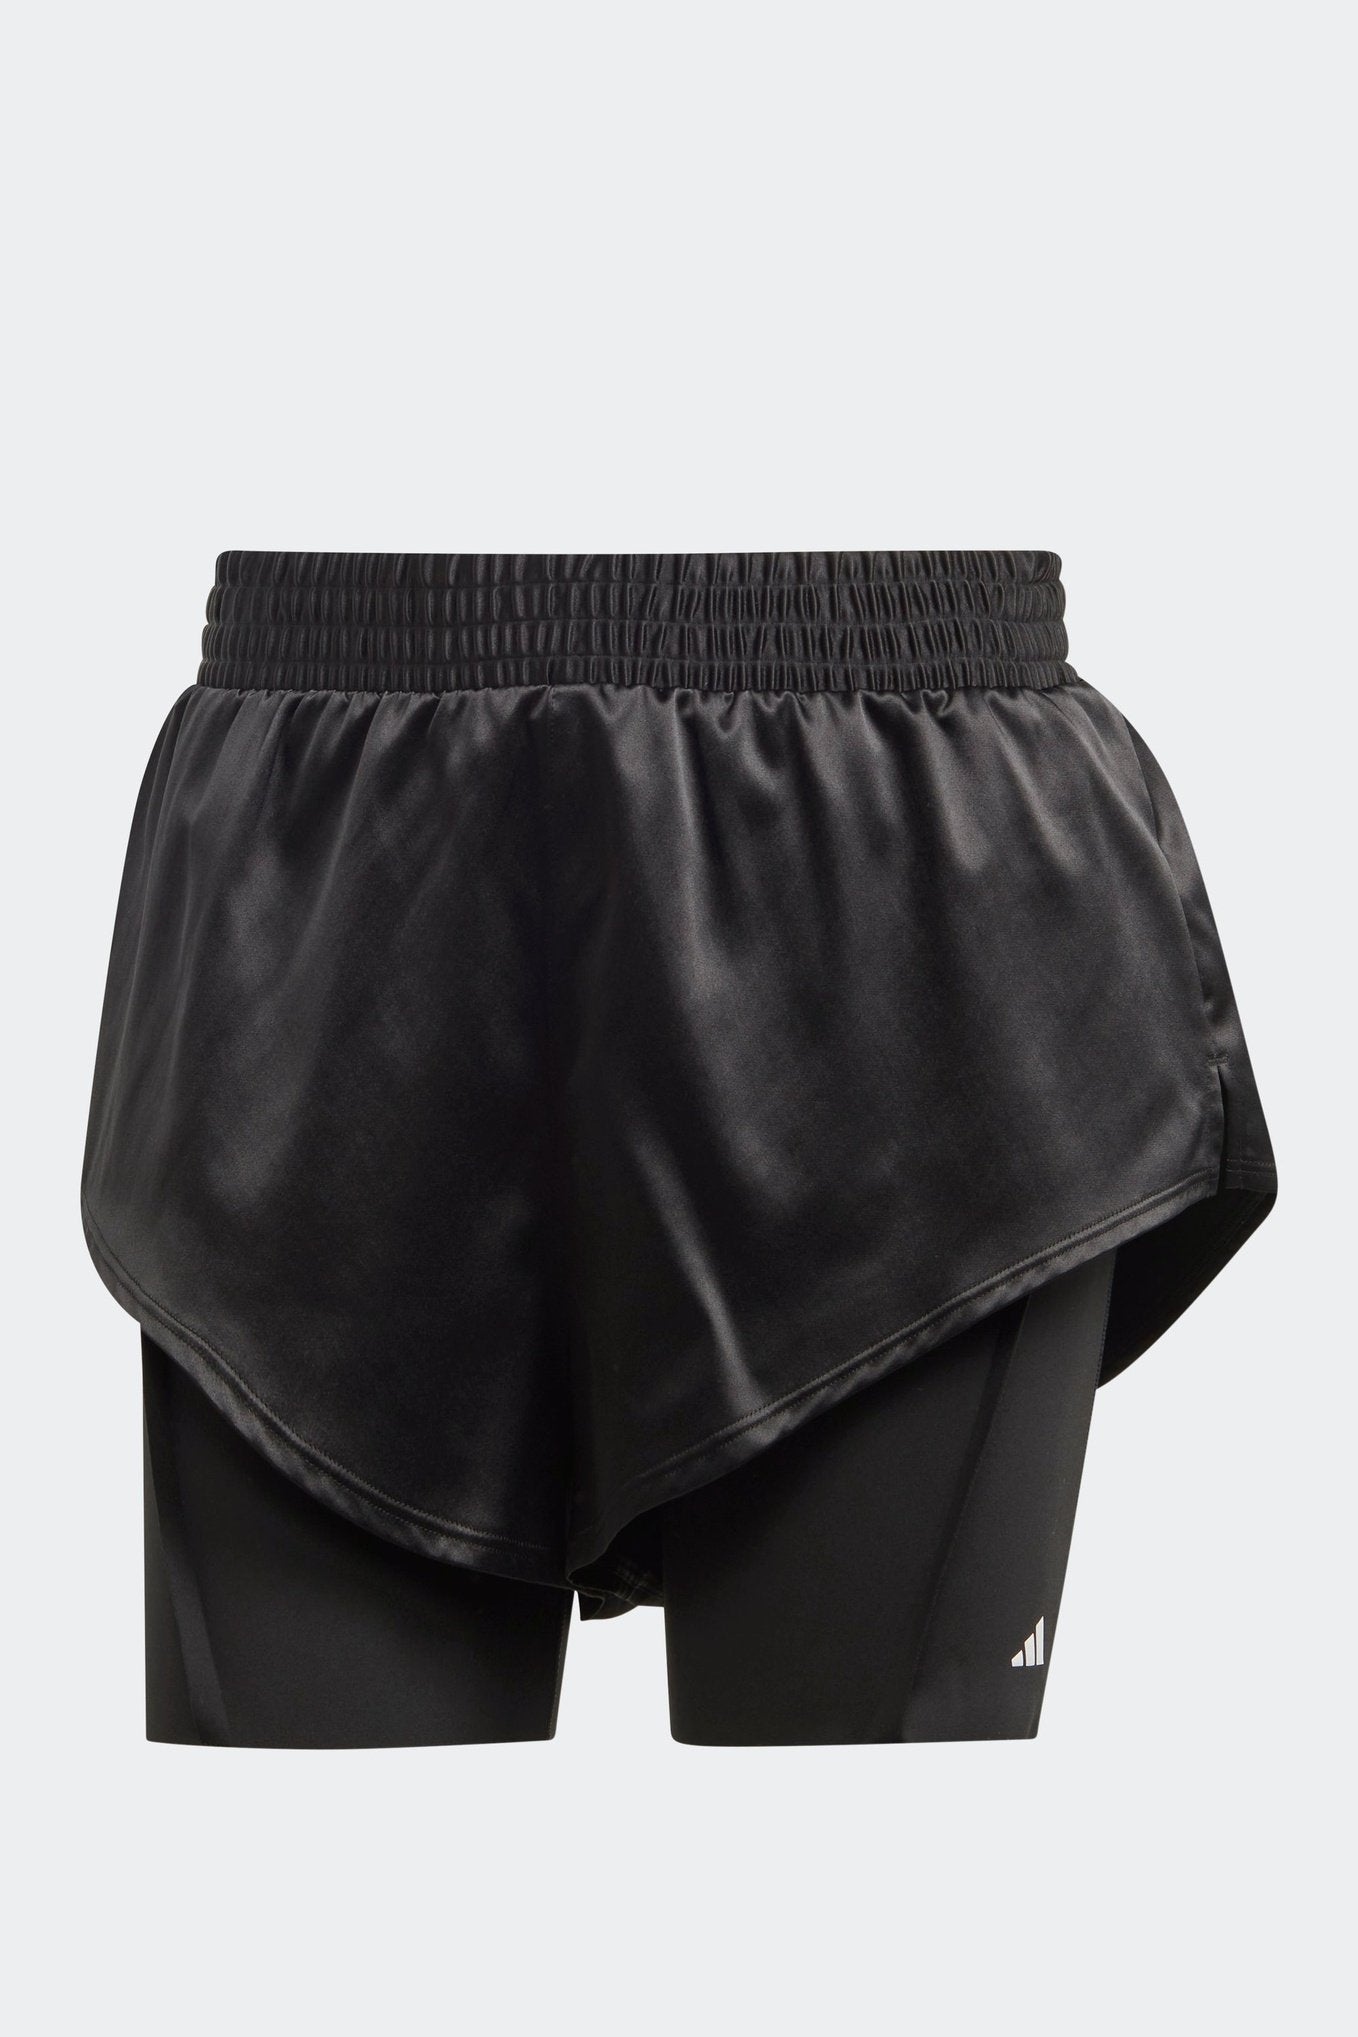 ADIDAS - מכנסיים קצרים לנשים POWER 2 IN 1 בצבע שחור ולבן - MASHBIR//365